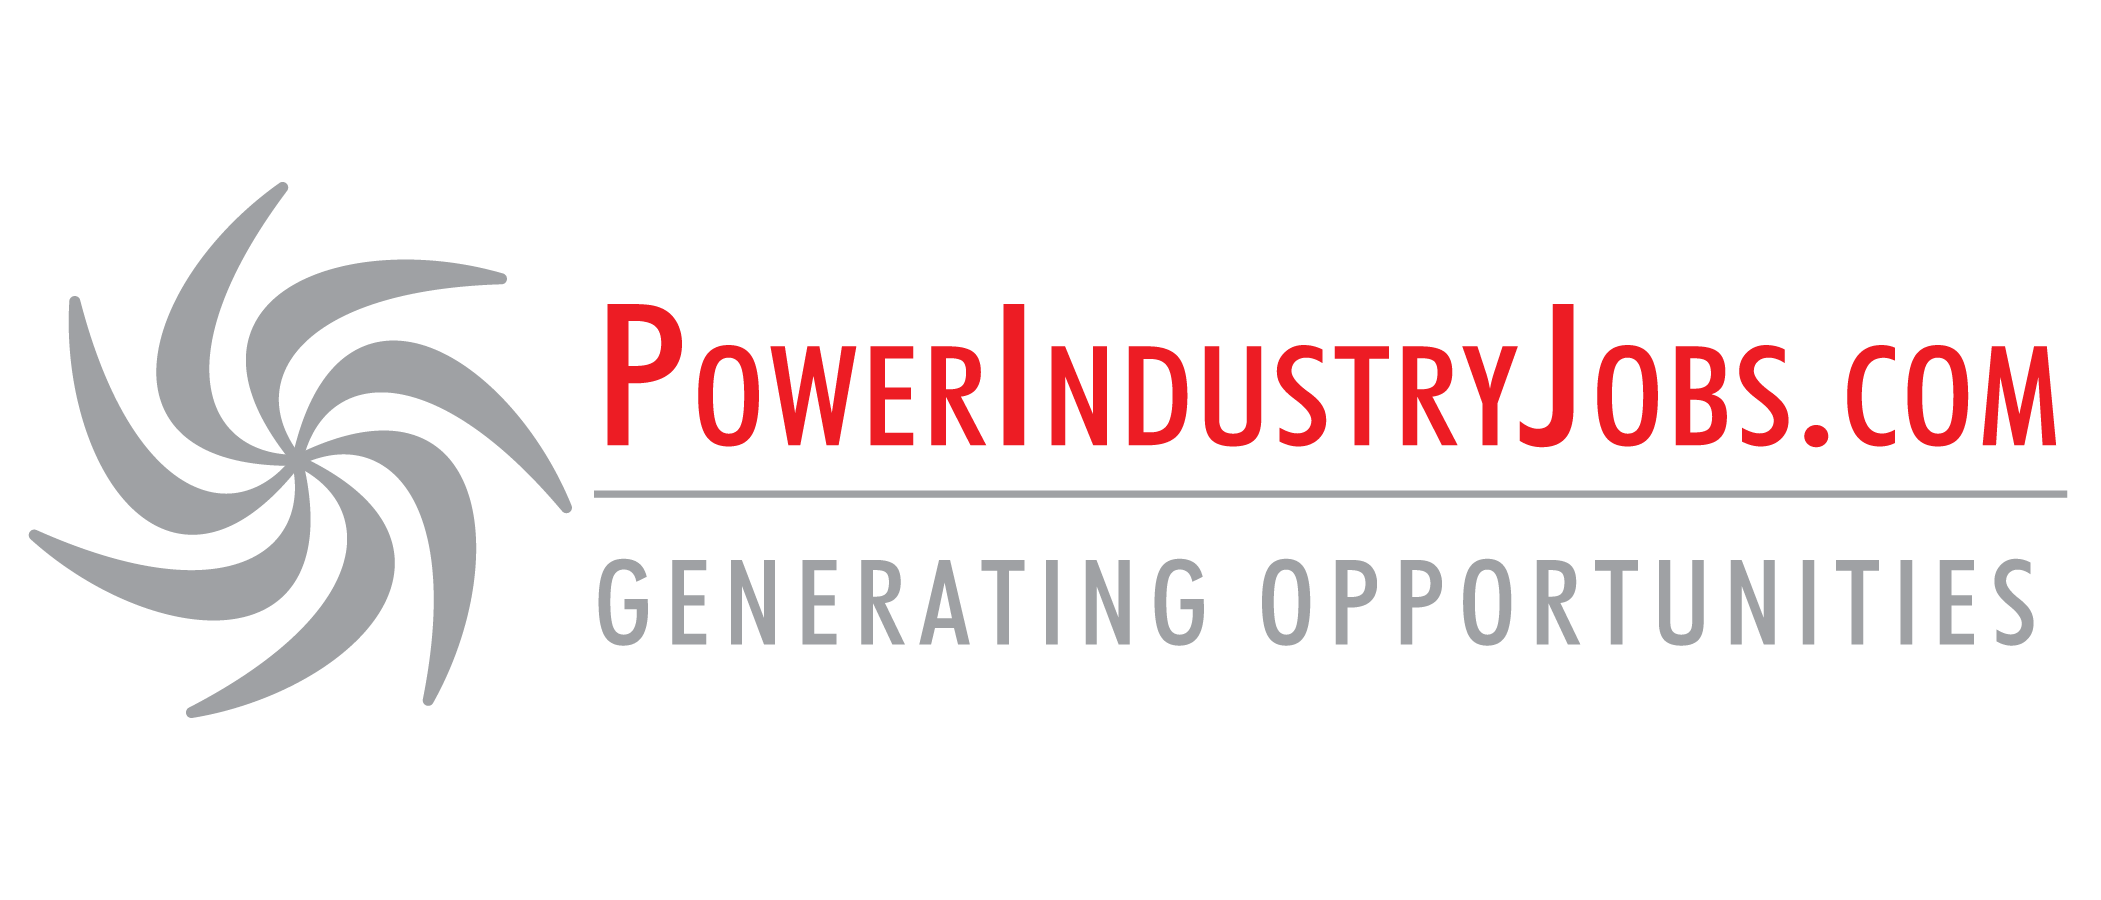 PowerIndustryJobs.com logo